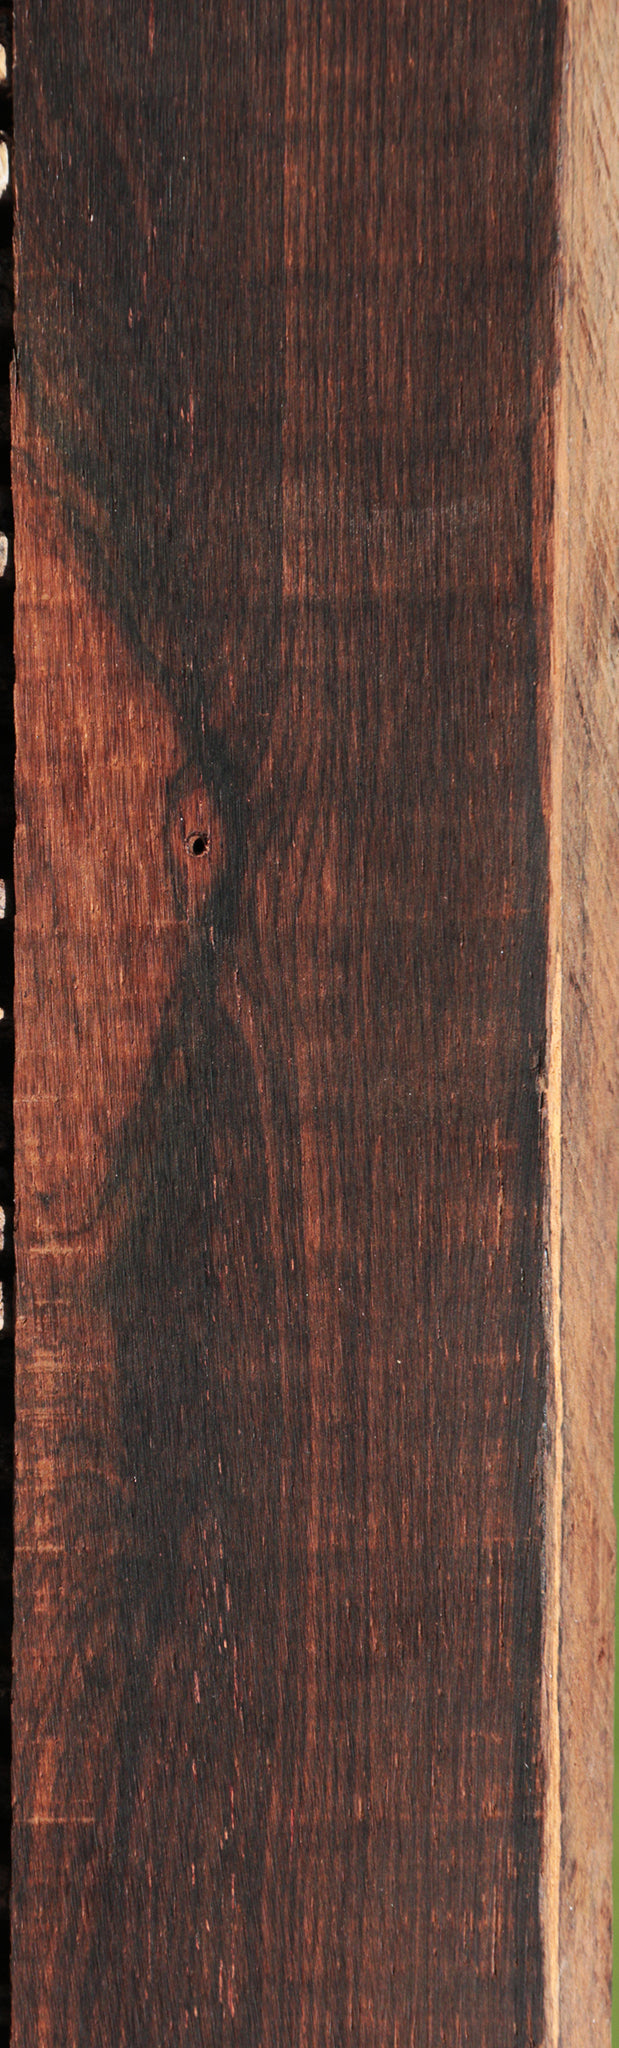 Brazilian Rosewood Lumber